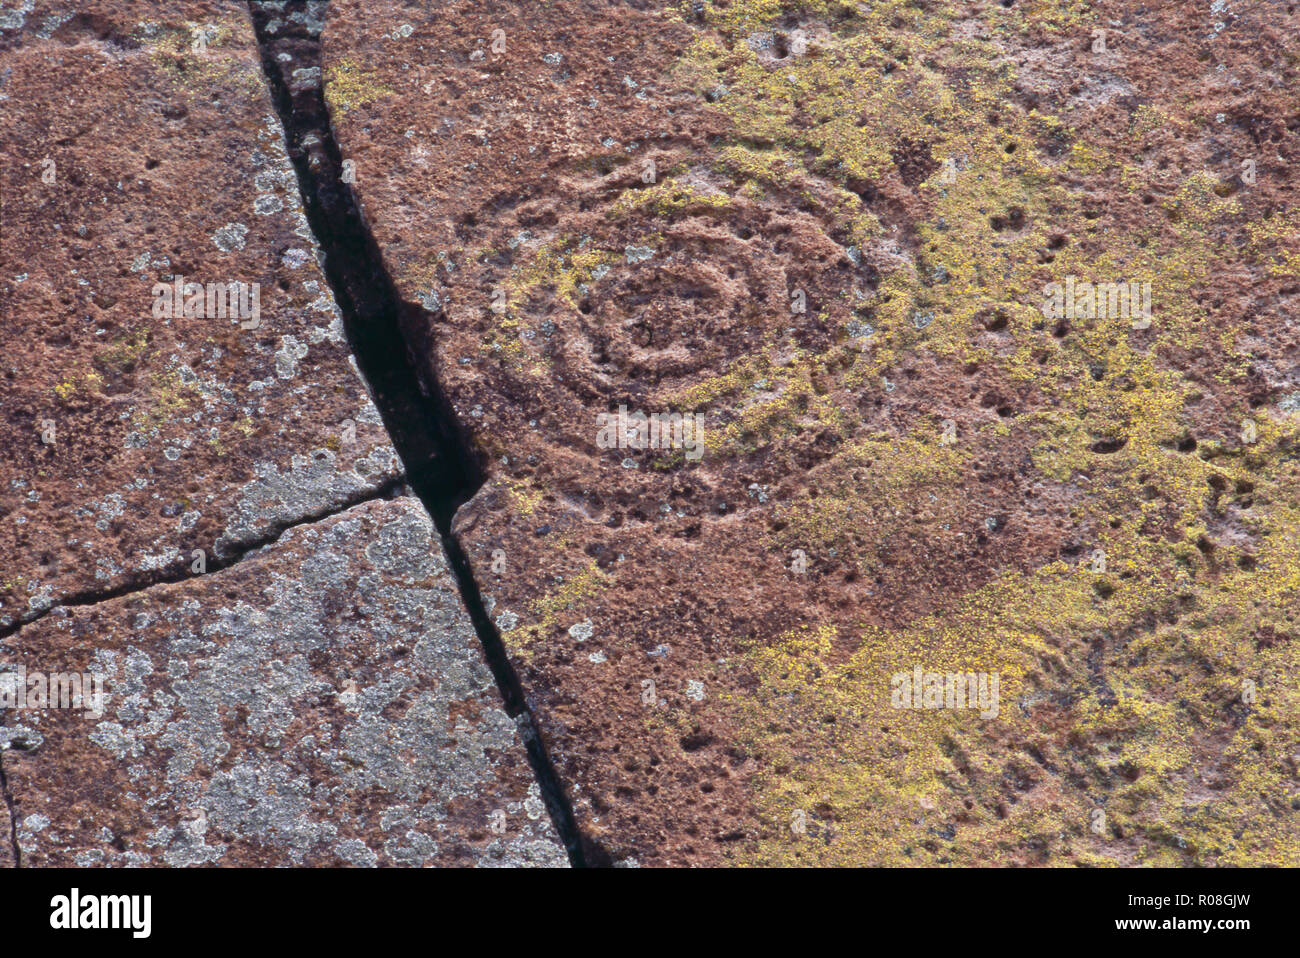 Native American petroglyph of concentric circles, Tsankawi mesa cliff-dwellings, New Mexico. Photograph Stock Photo